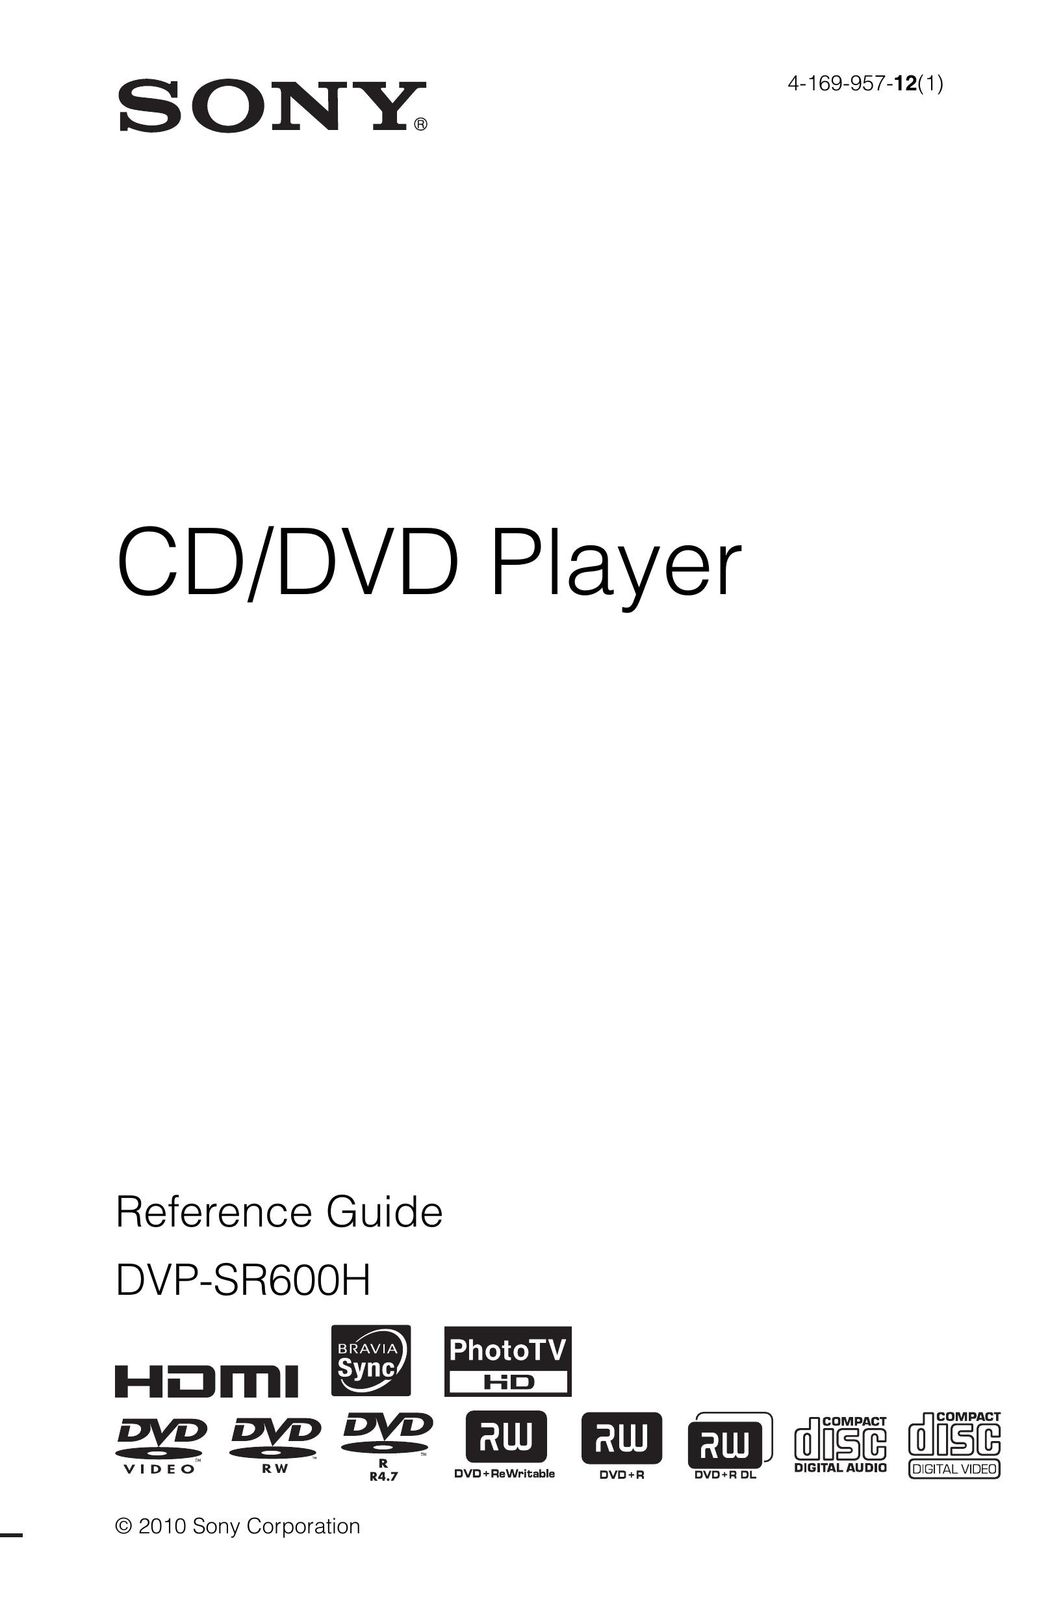 Sony 4-169-957-12(1) DVD Player User Manual